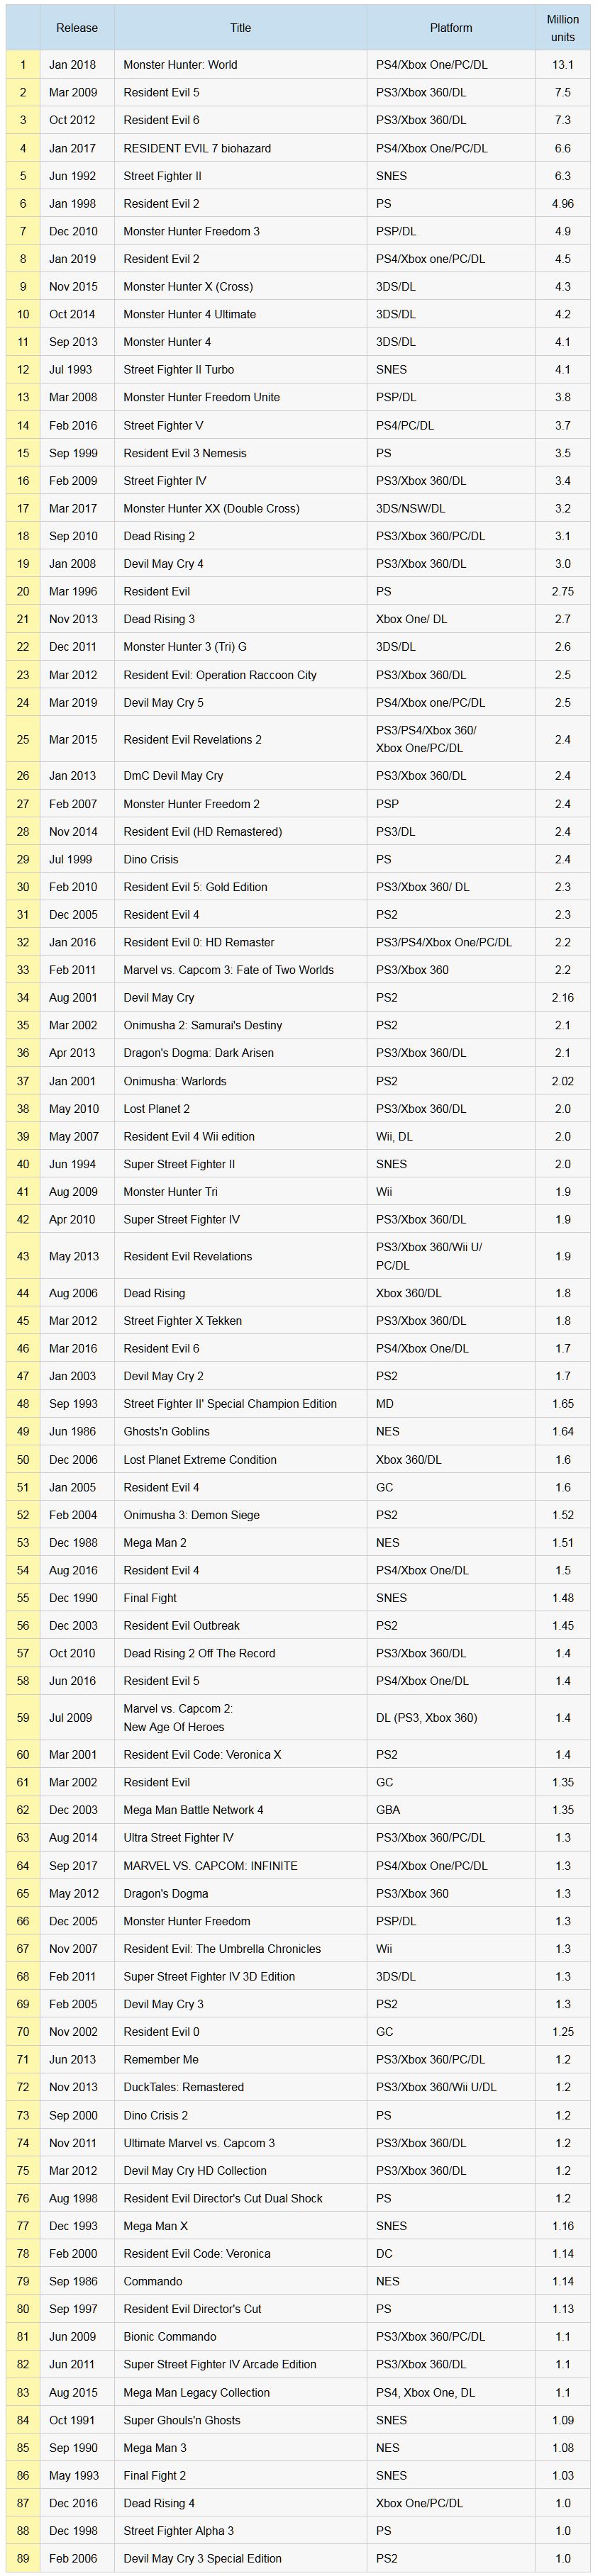 Capcom - Weltweite Software-Verkaufs-Charts bis 30.06.19 